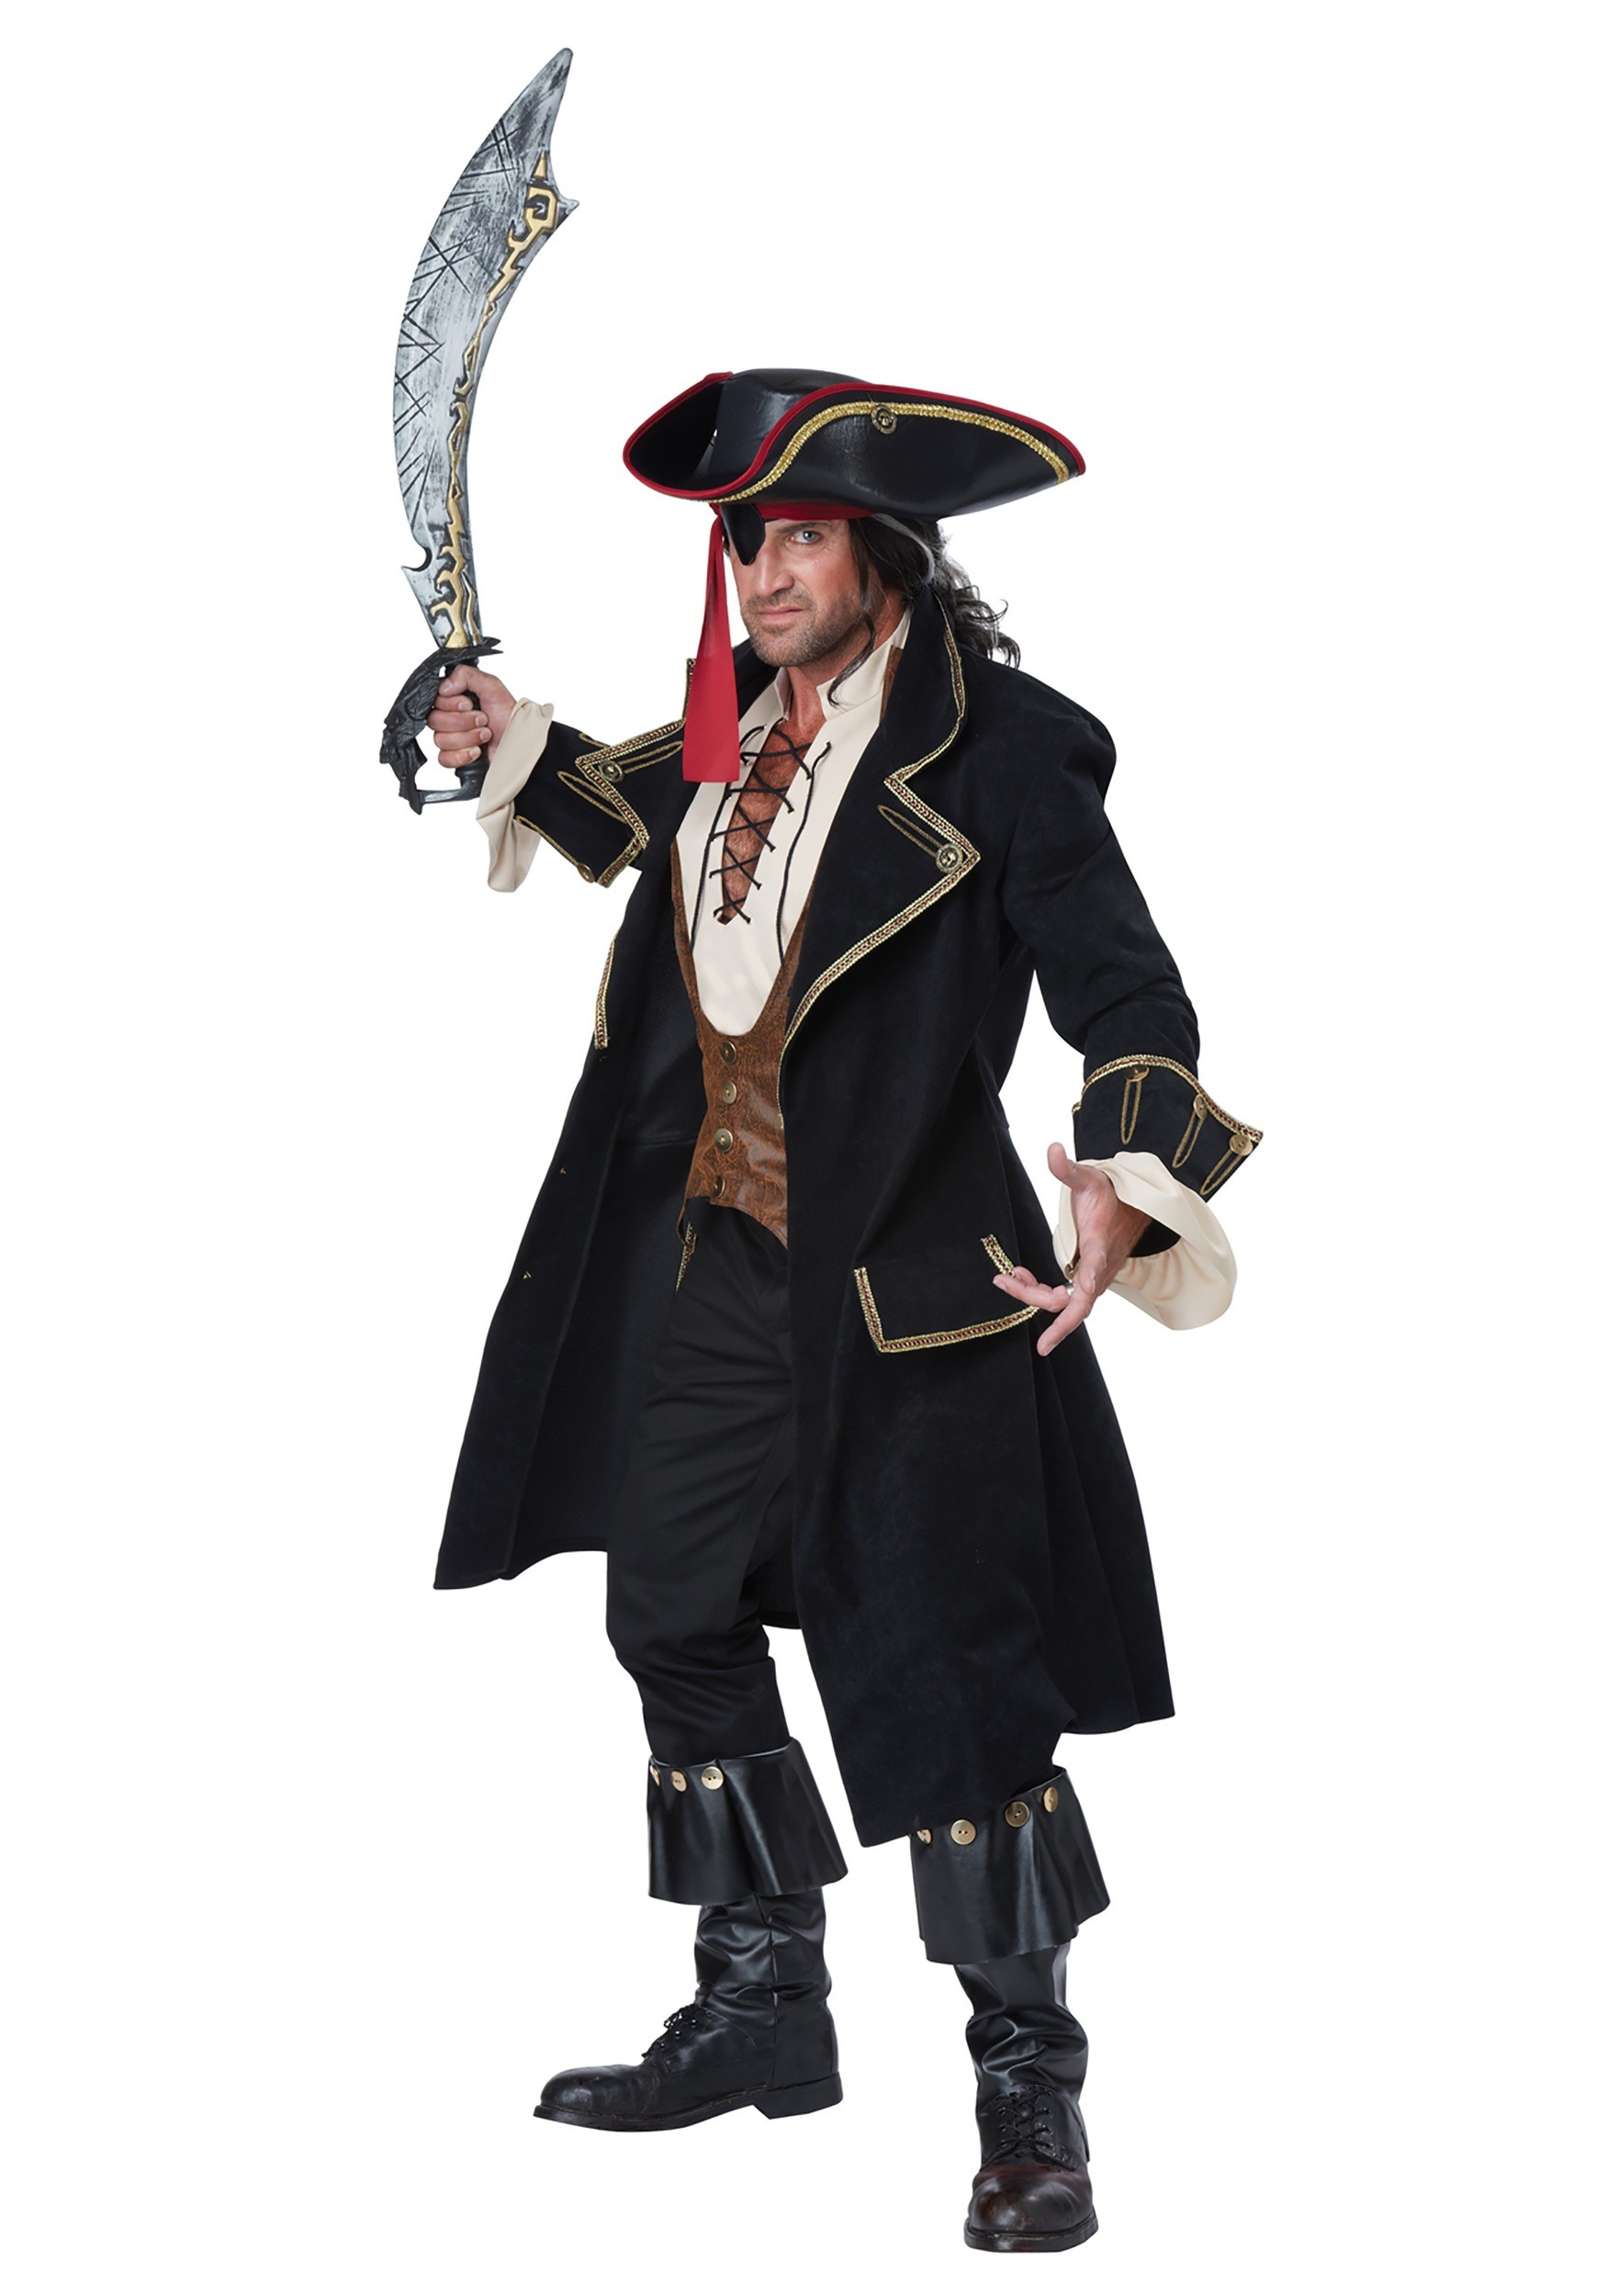 Deluxe Pirate Captain Costume for Men